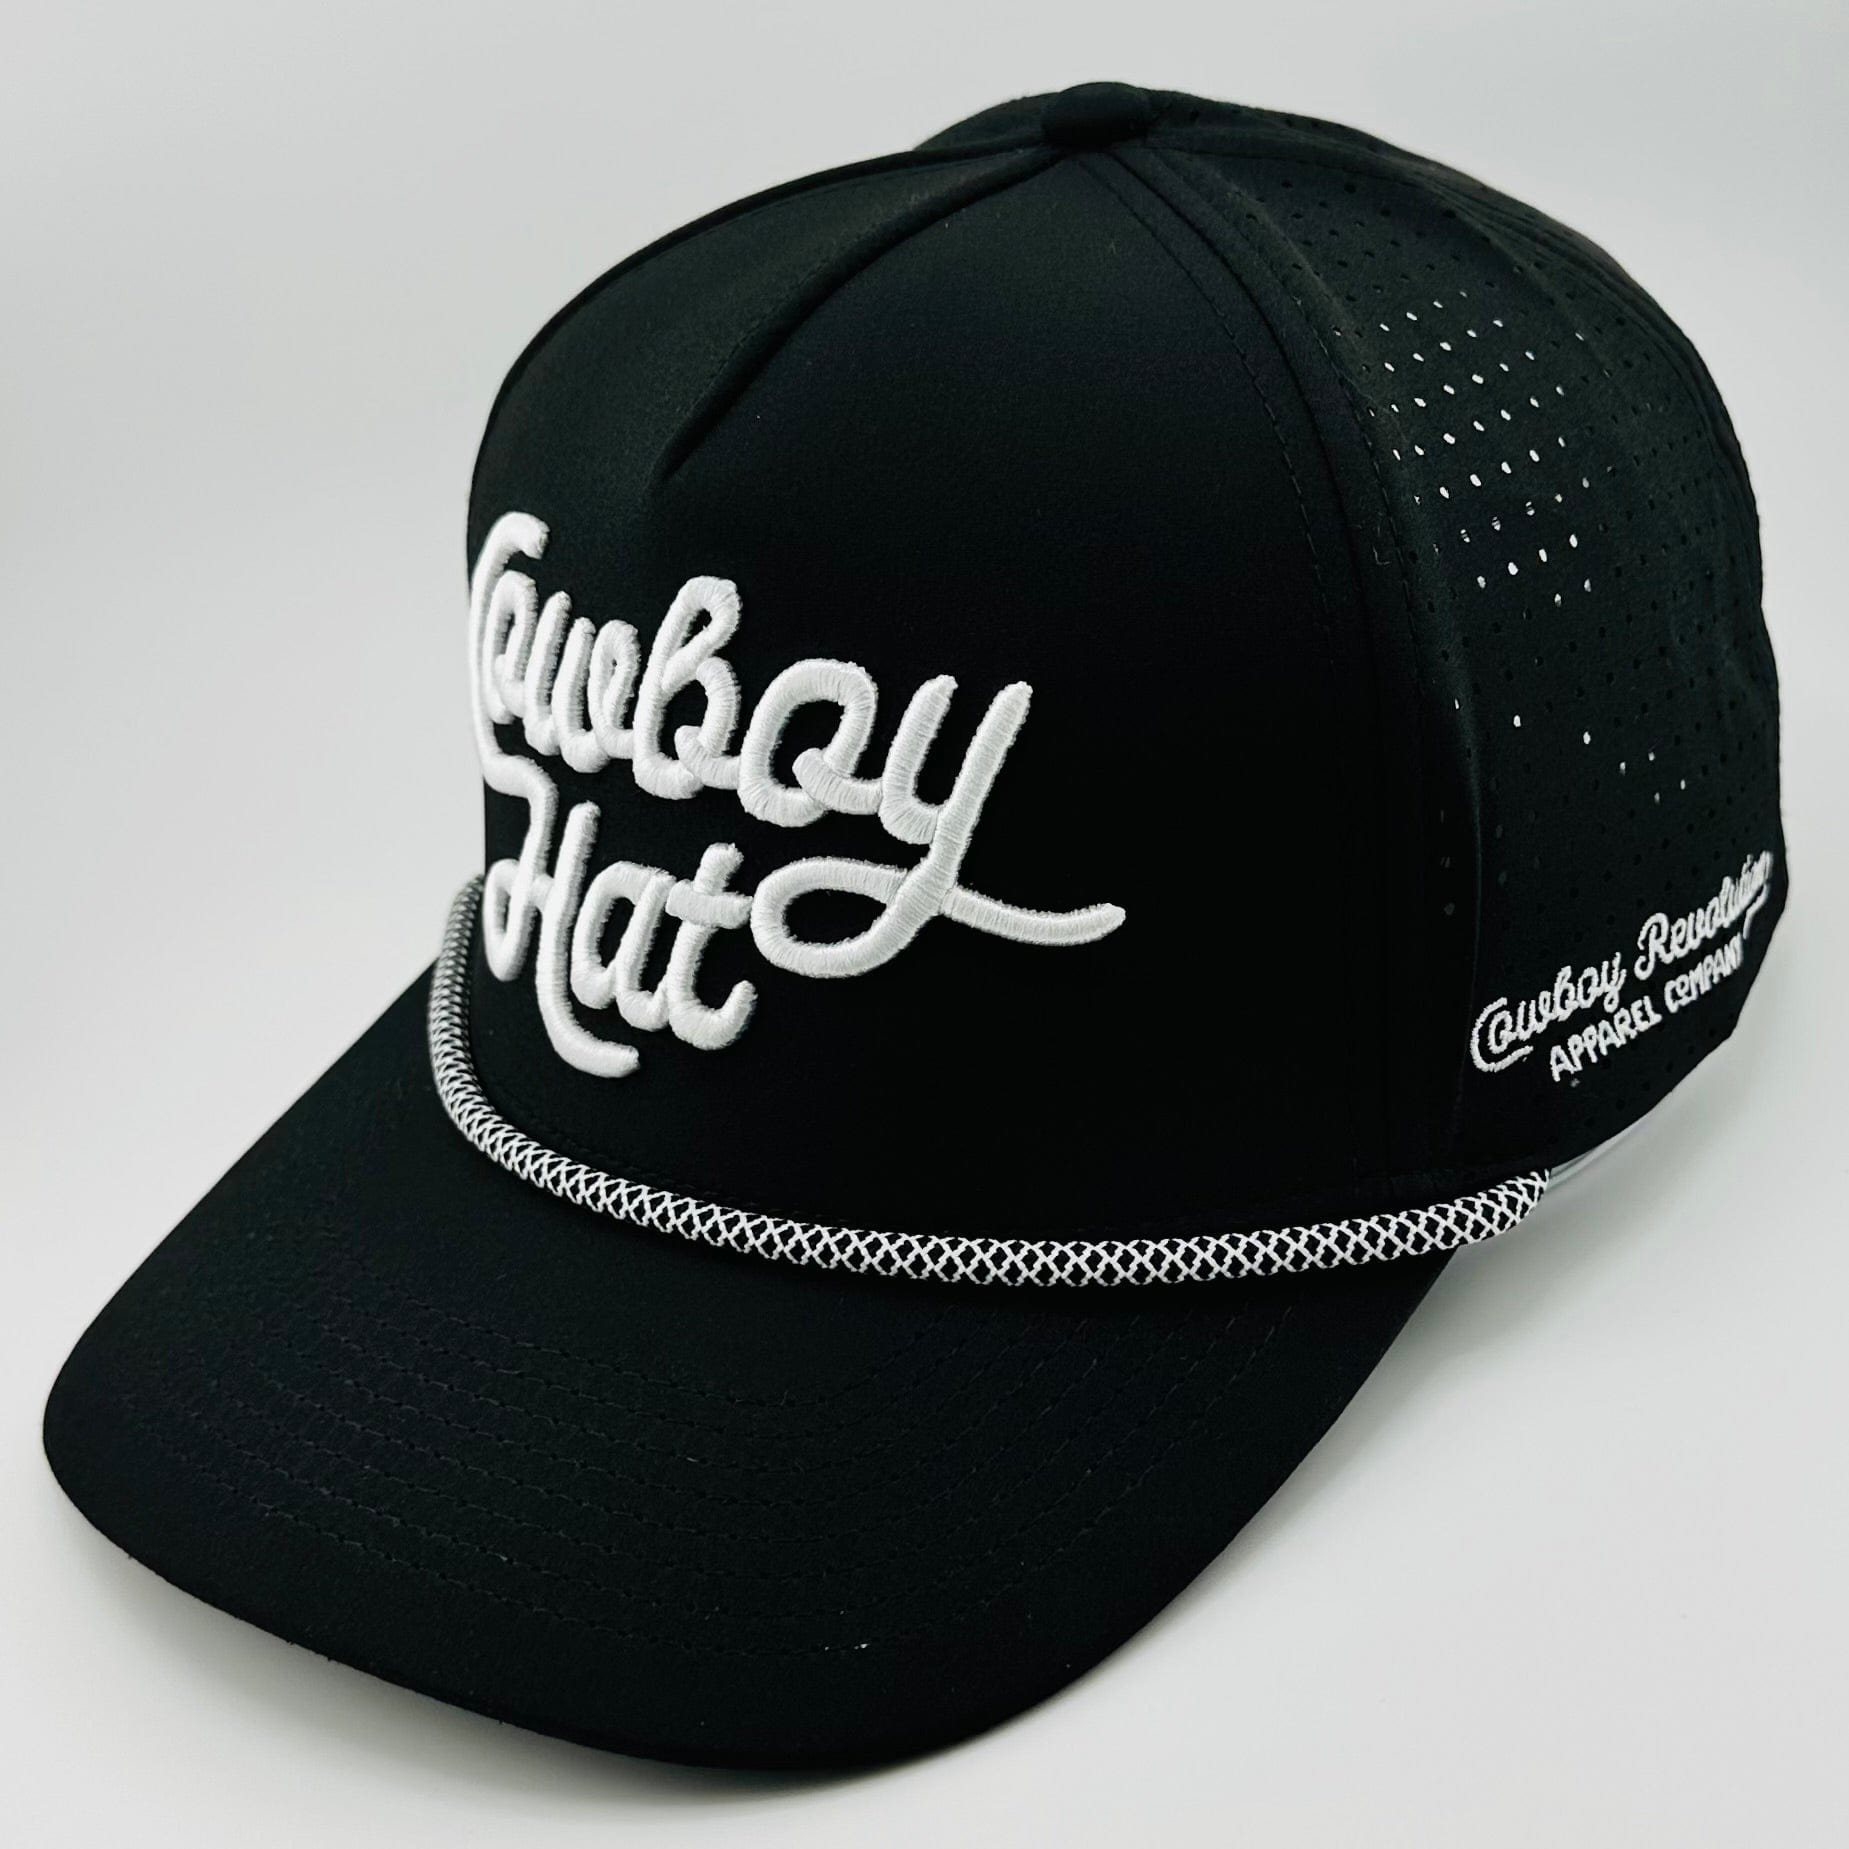 Cowboy Hat” Summer Edition - Cowboy Revolution Black 5-panel Trucker -  Russell's Western Wear, Inc.